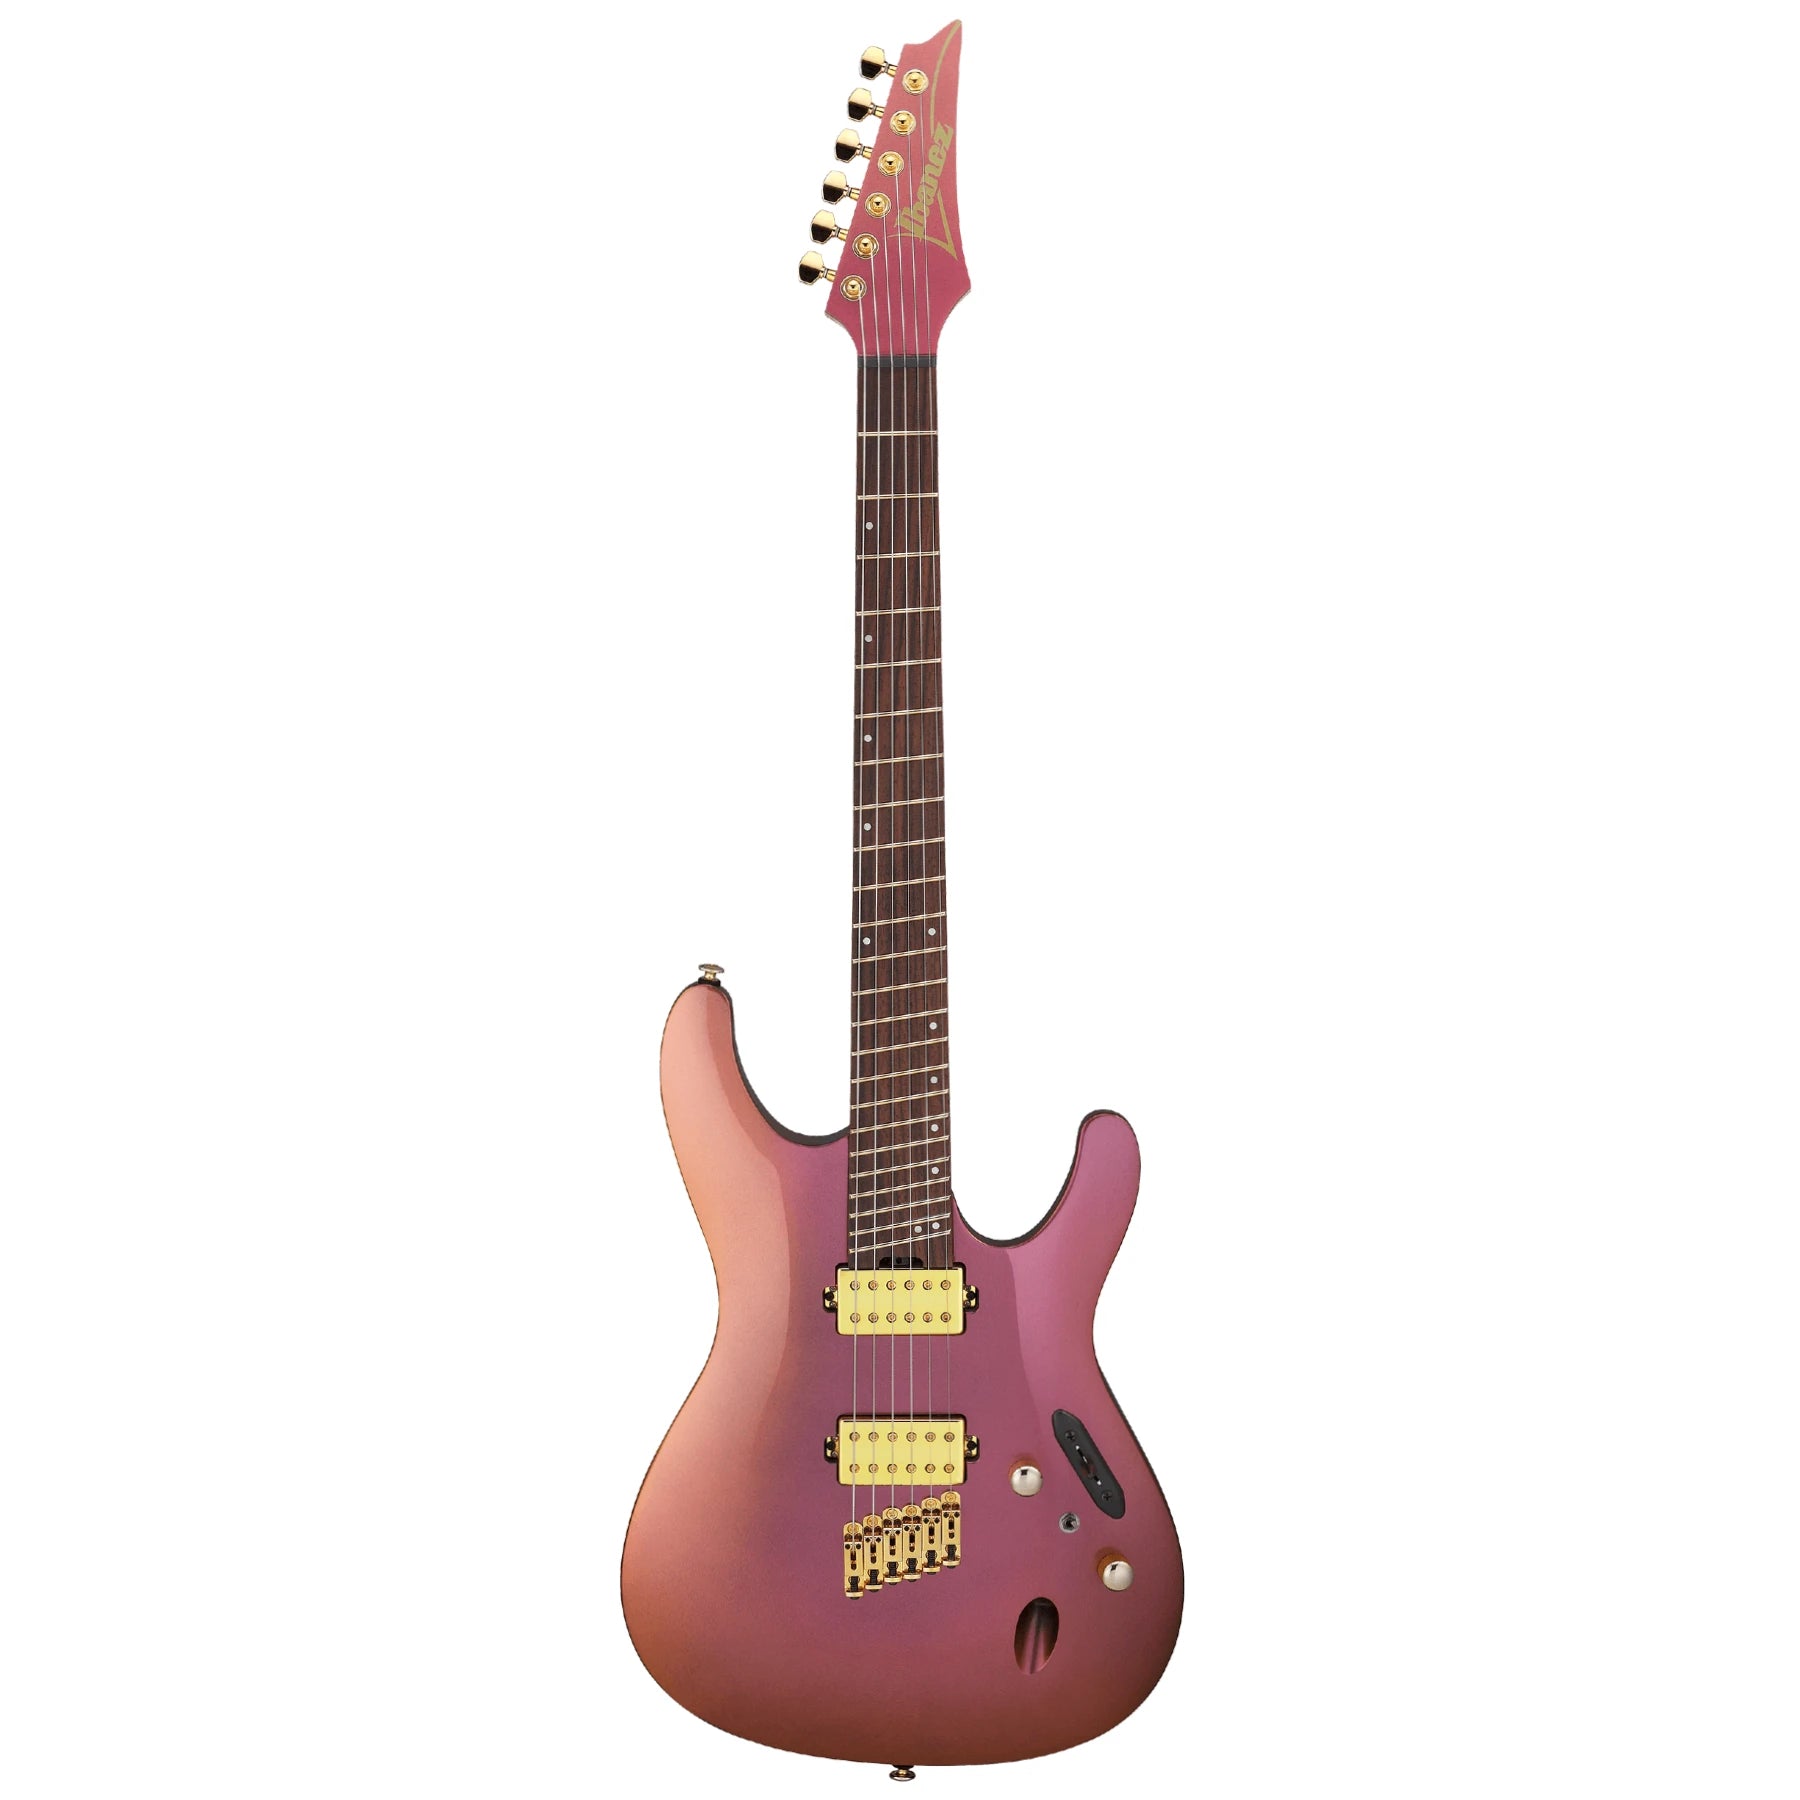 Ibanez SML721 Electric Guitar - Rose Gold Chameleon